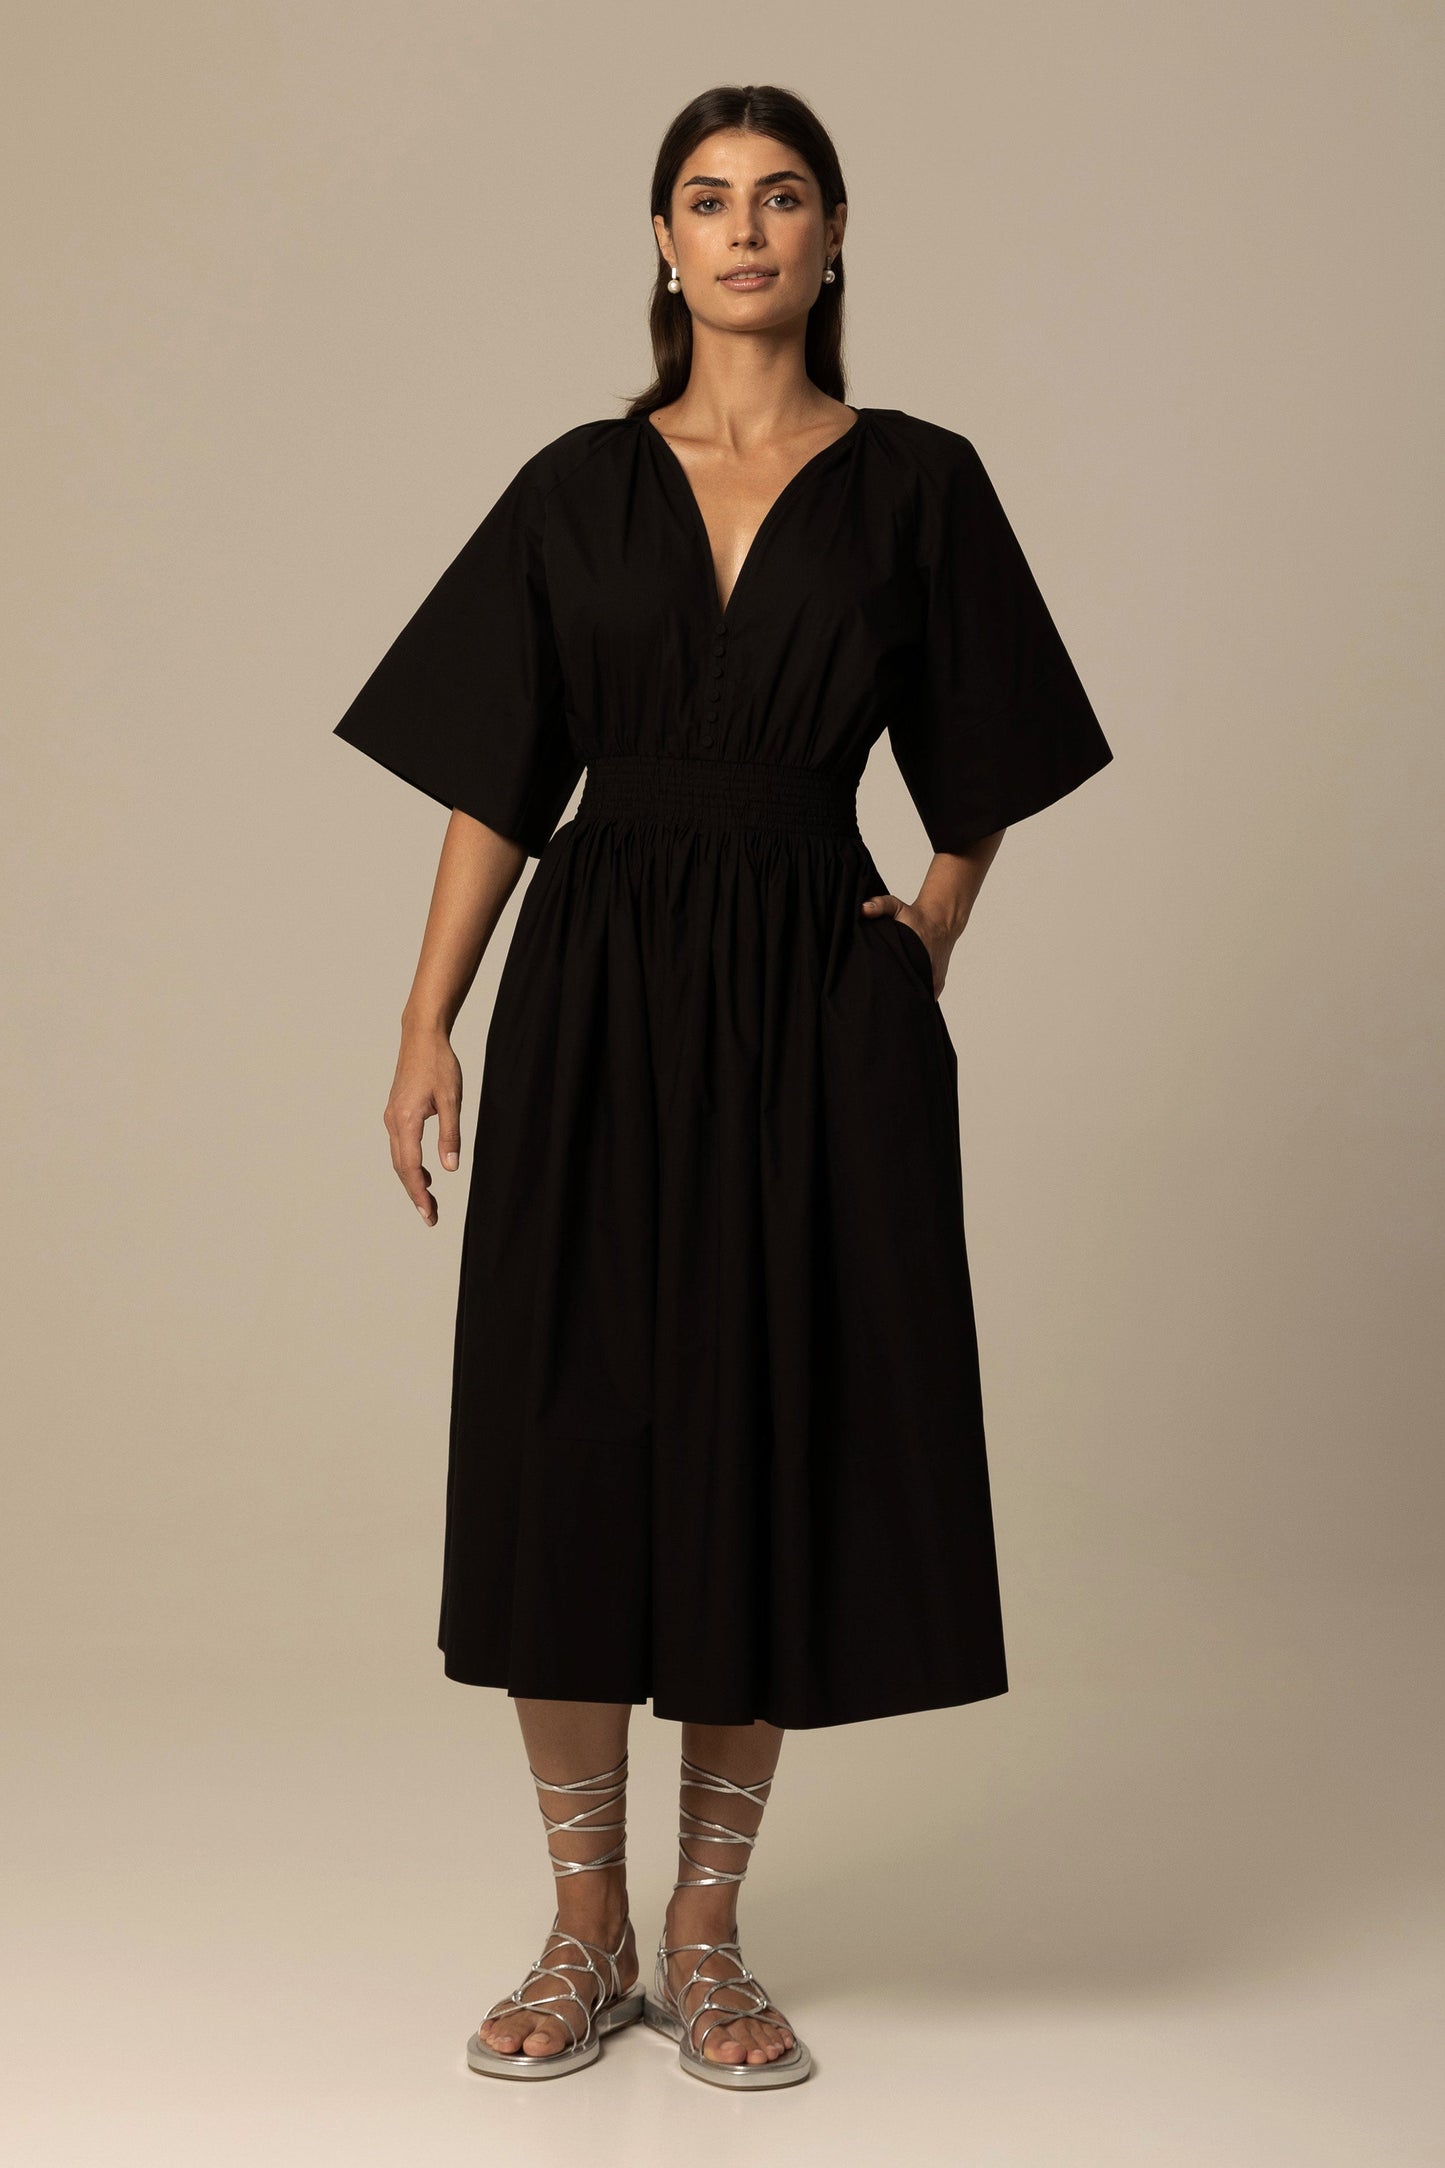 Orgaic cotton tank dress in black – Santicler